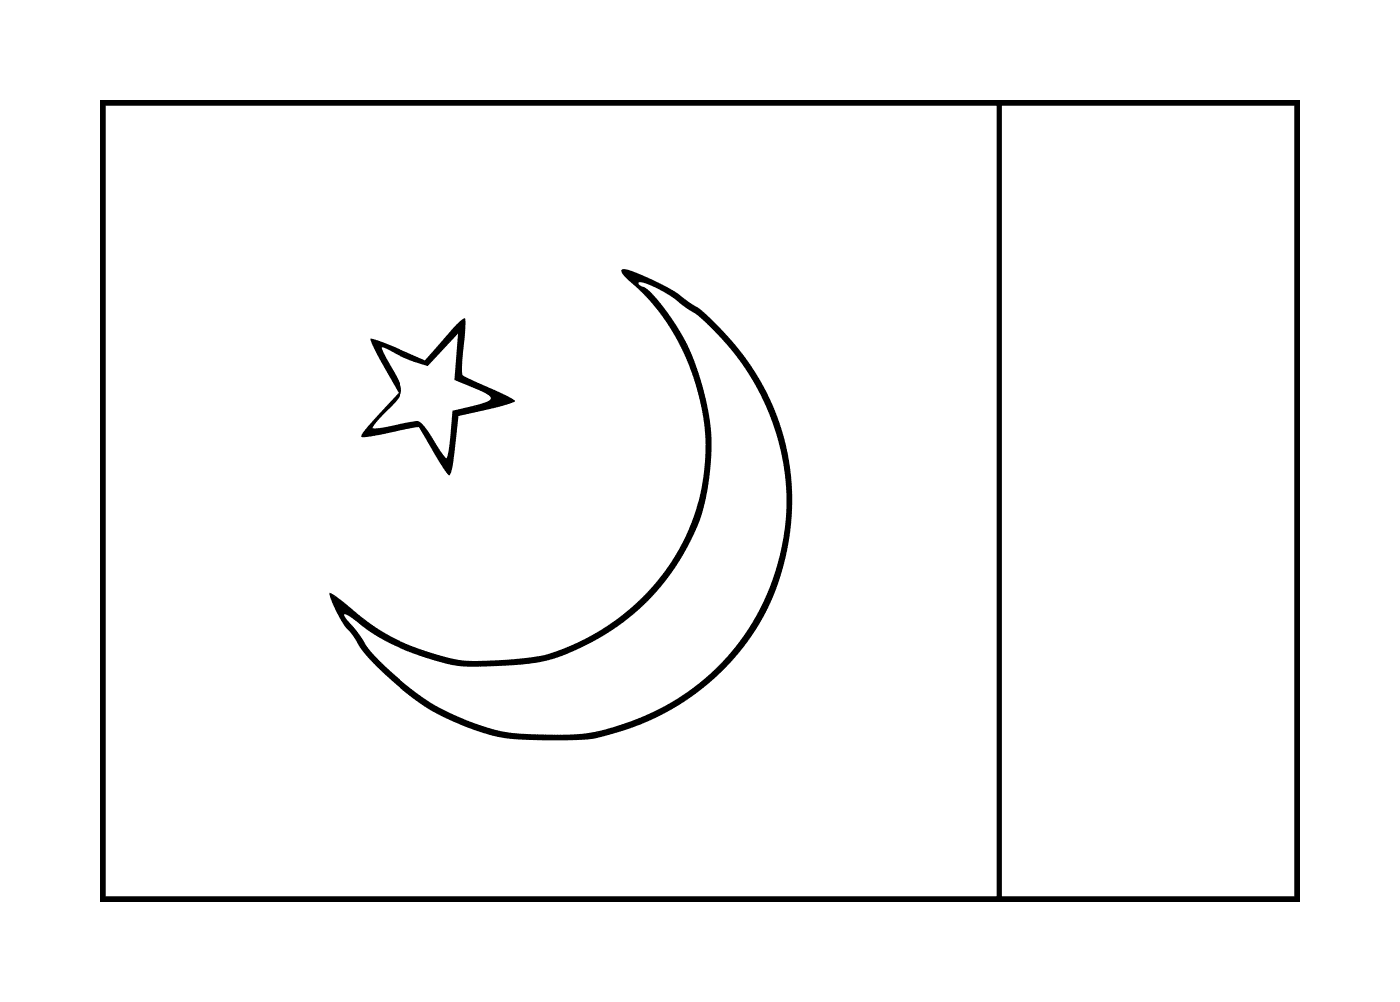  Flag of Pakistan 